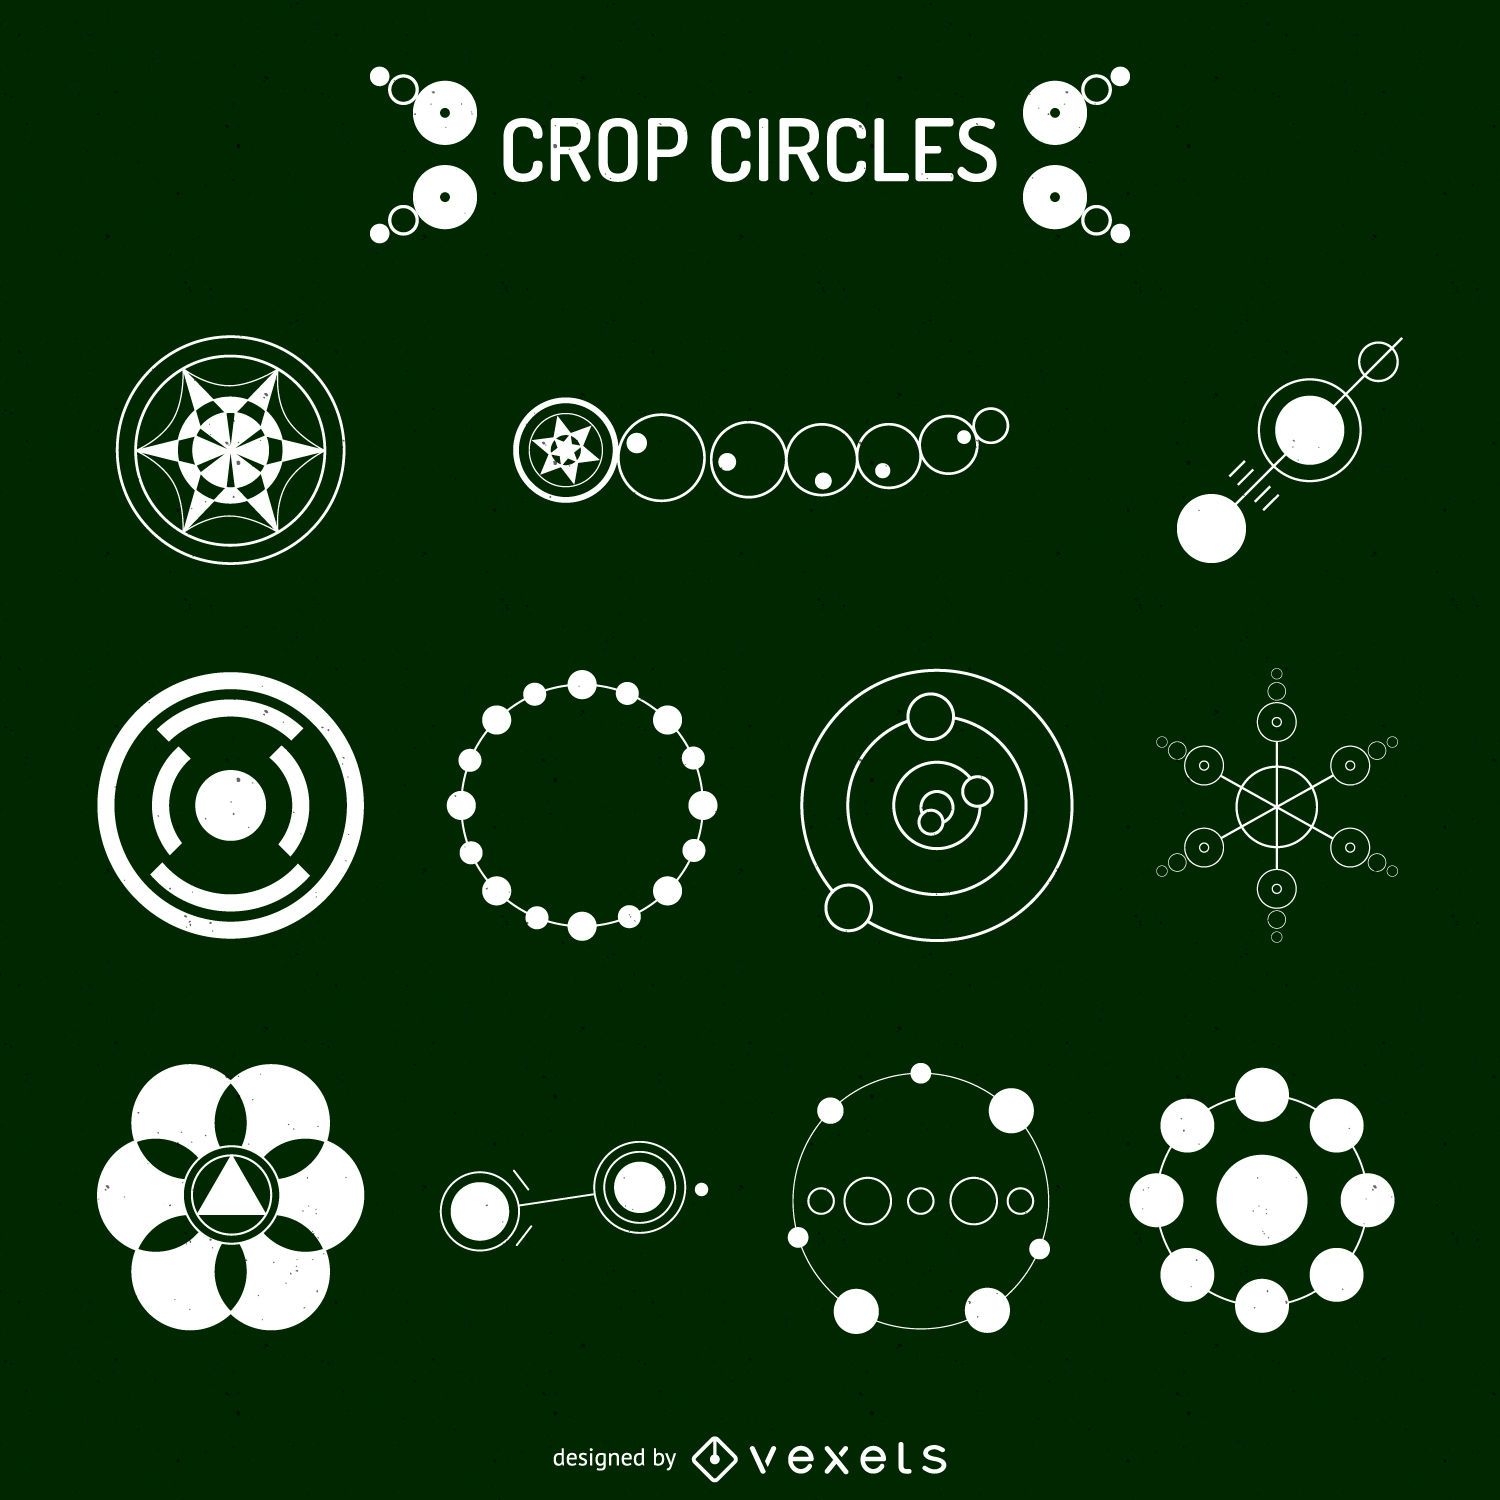 Crop circles illustration set